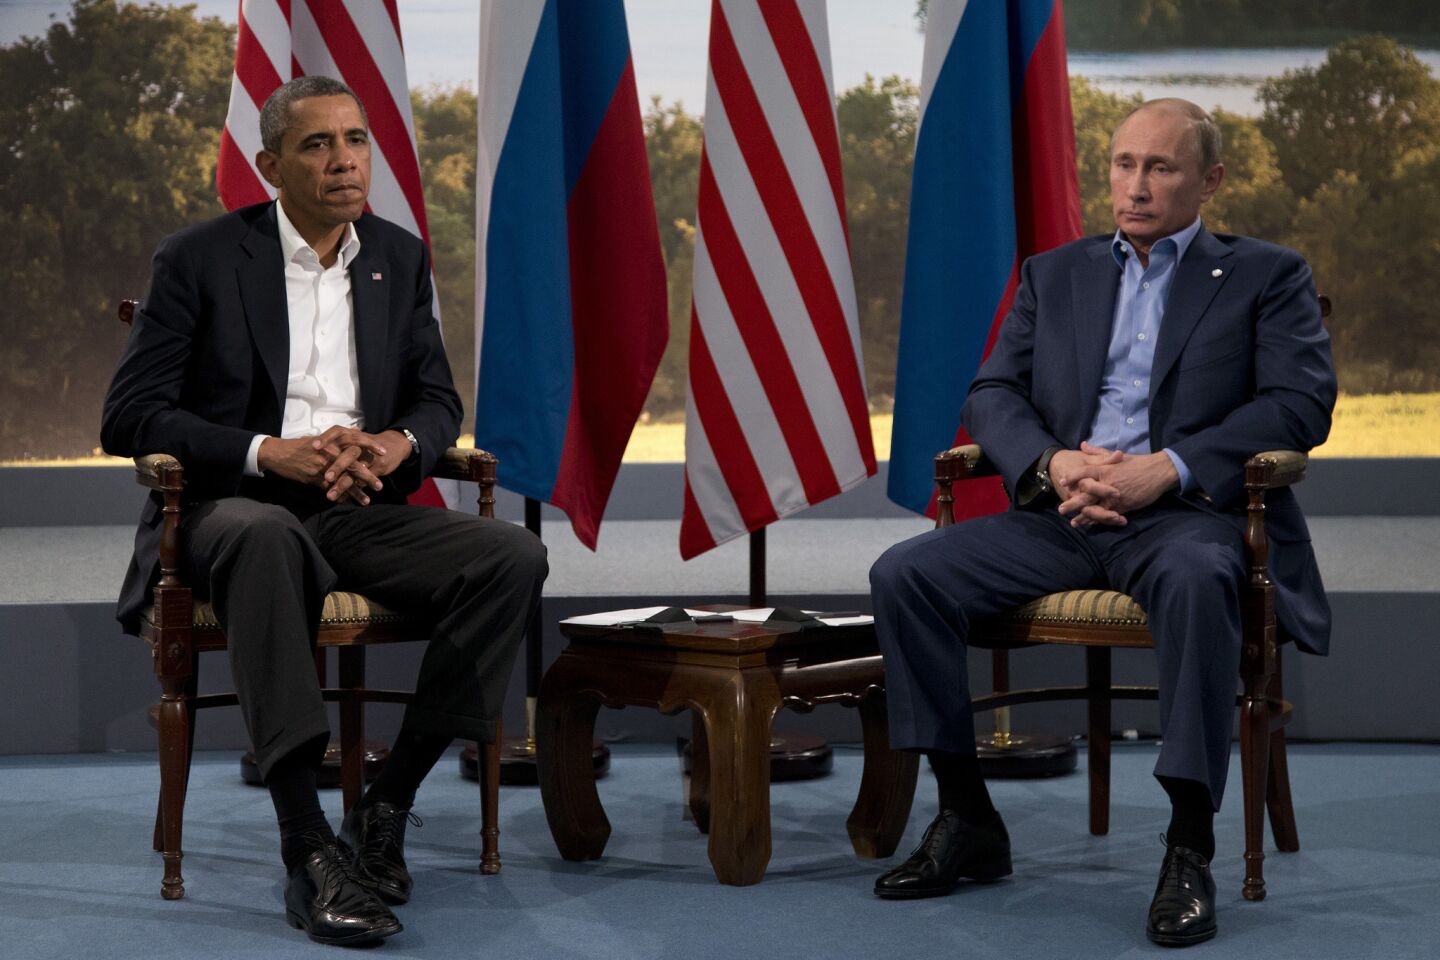 Obama and Putin's awkward sit-down